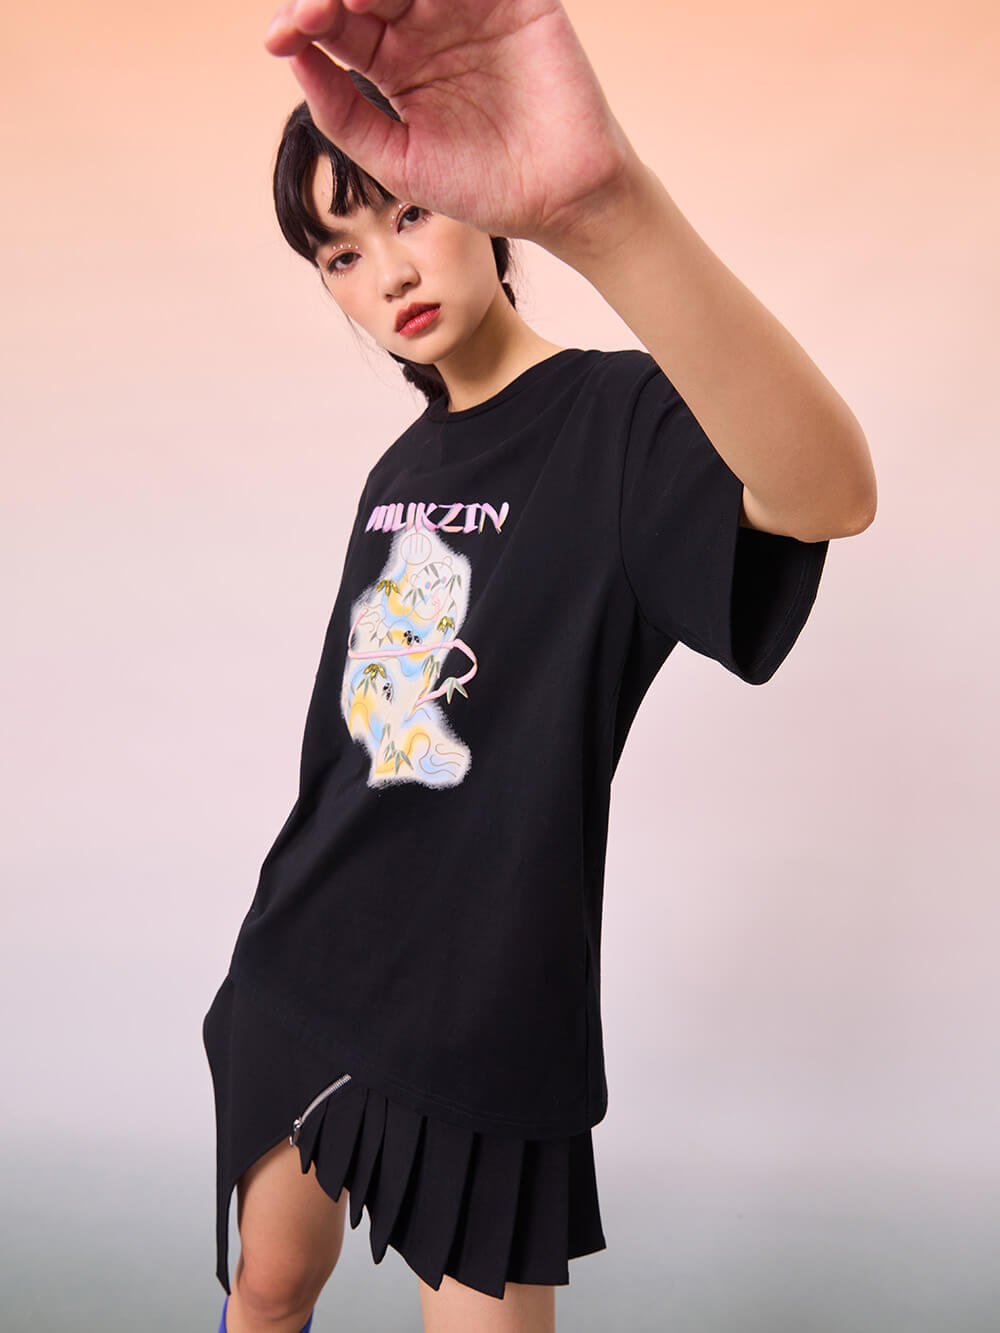 MUKZIN Black Artist Collaboration Fashion T-Shirt